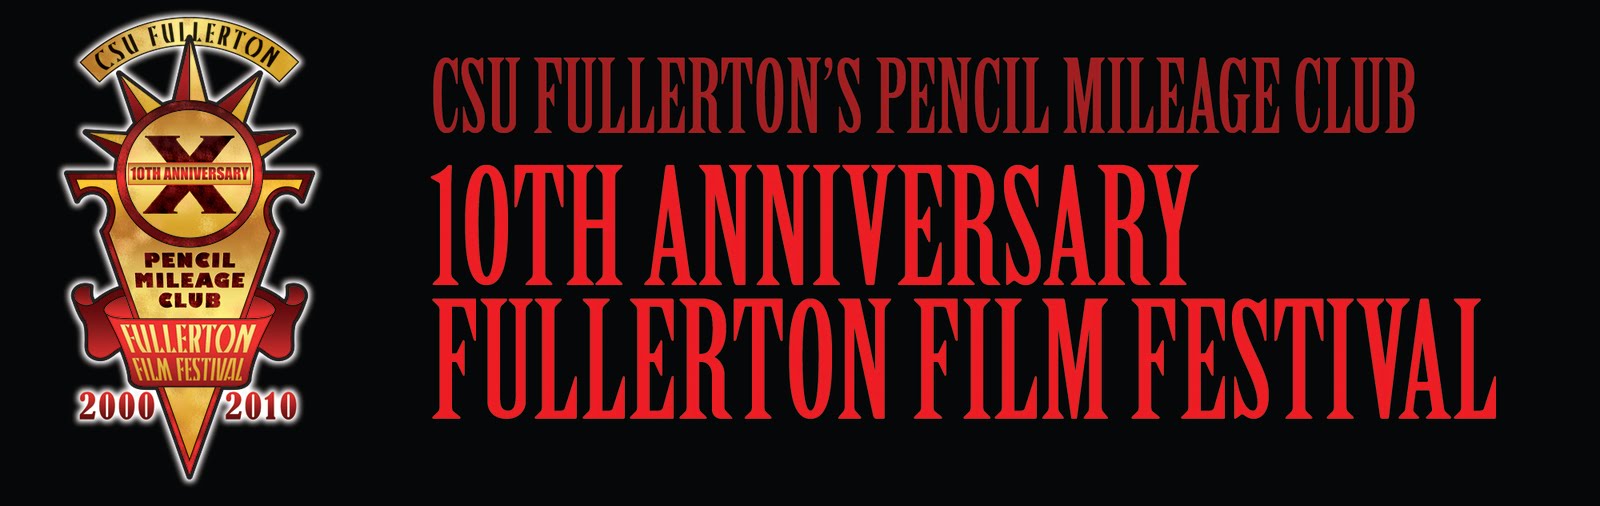 CSUF Pencil Mileage Club Film Festival